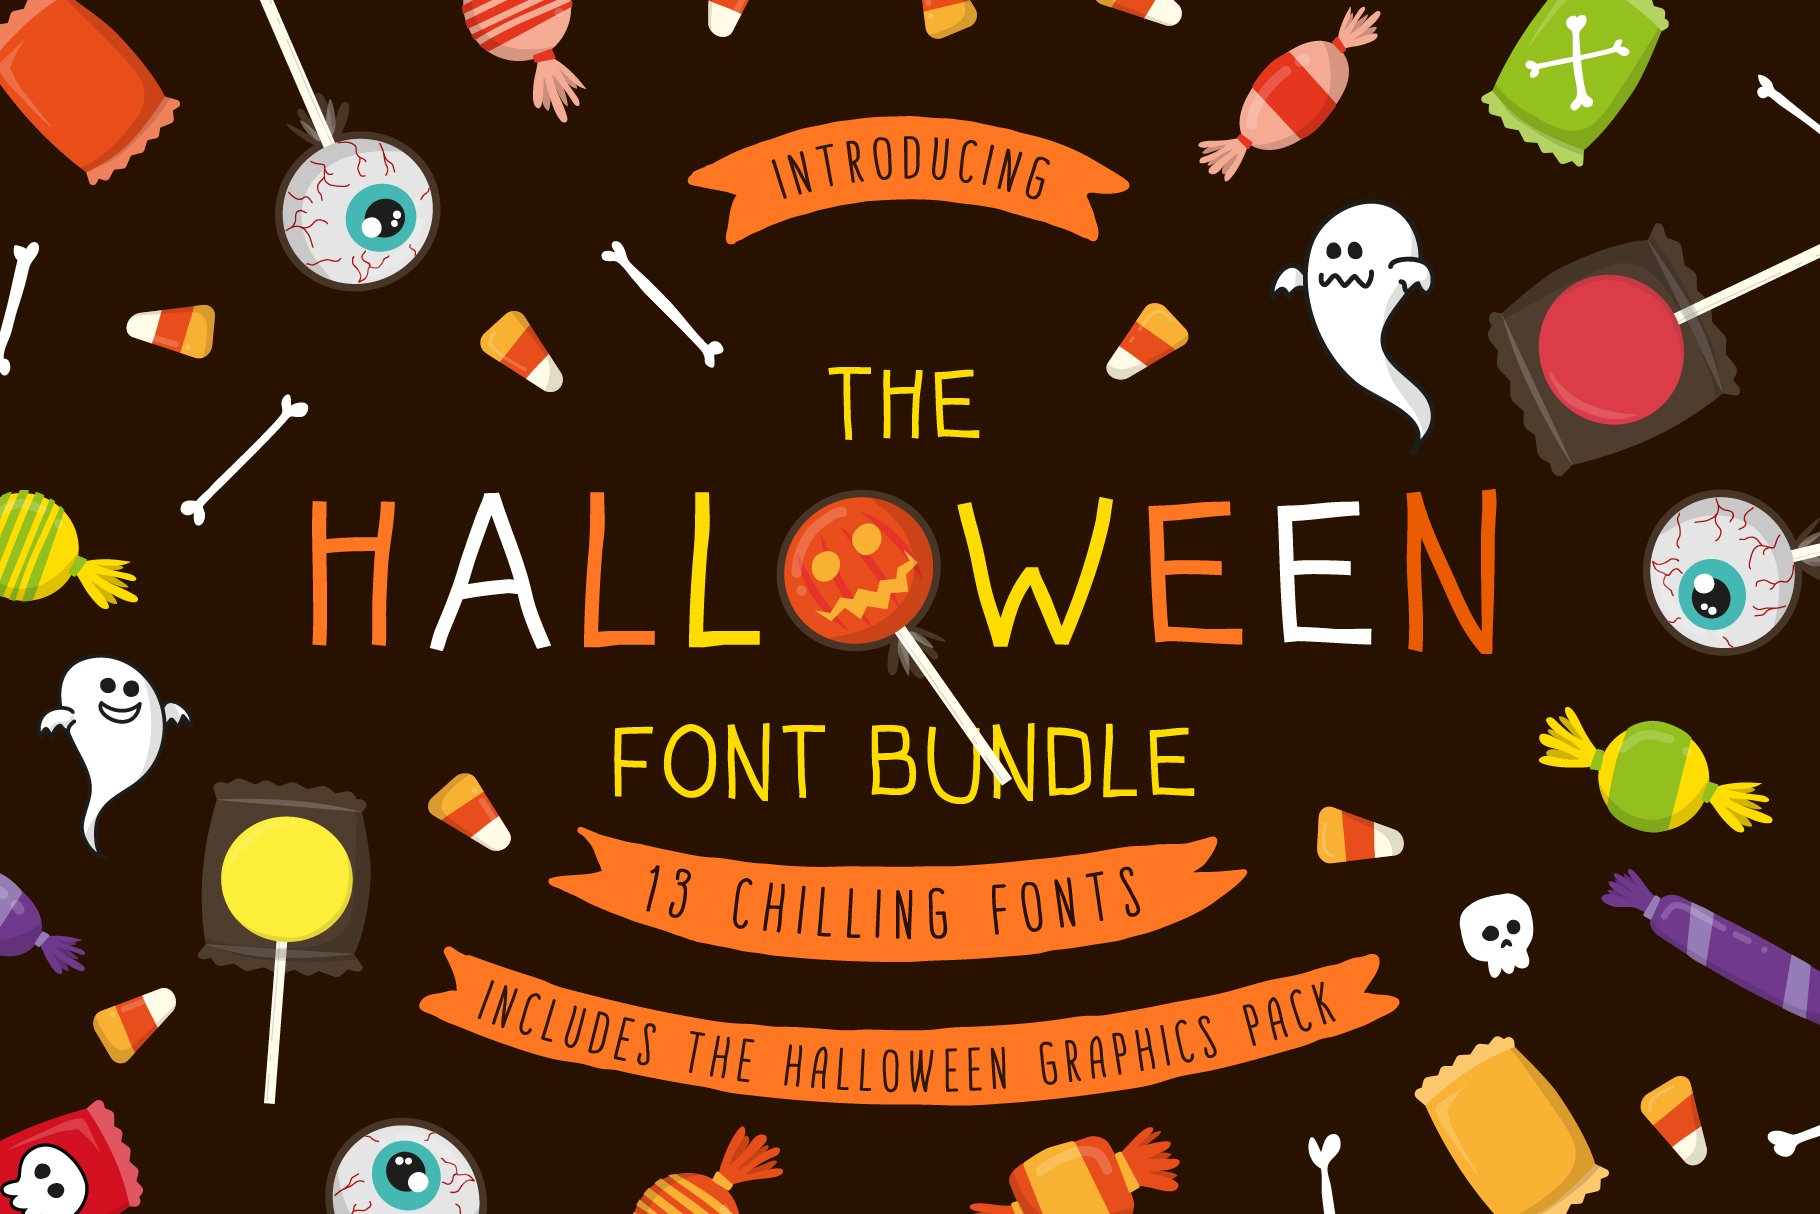 Halloween Font Bundle+FREE Graphics cover image.